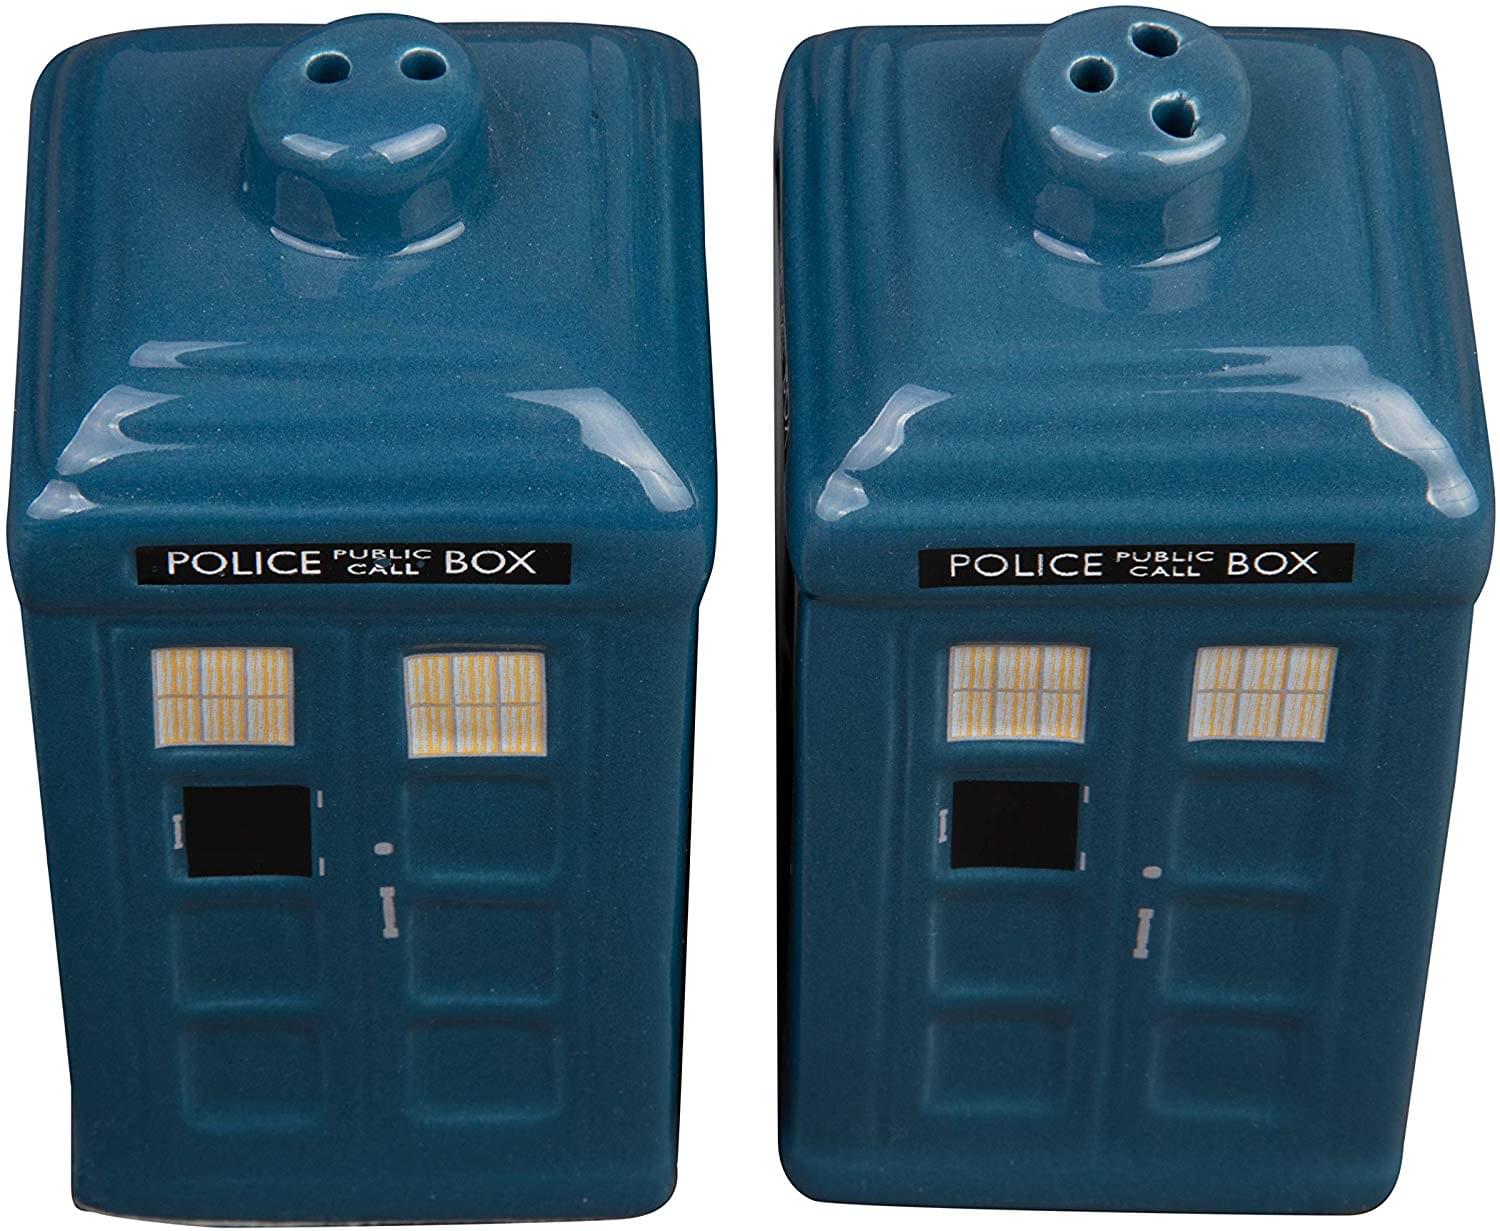 Doctor Who TARDIS Ceramic Salt & Pepper Shakers | Set of 2